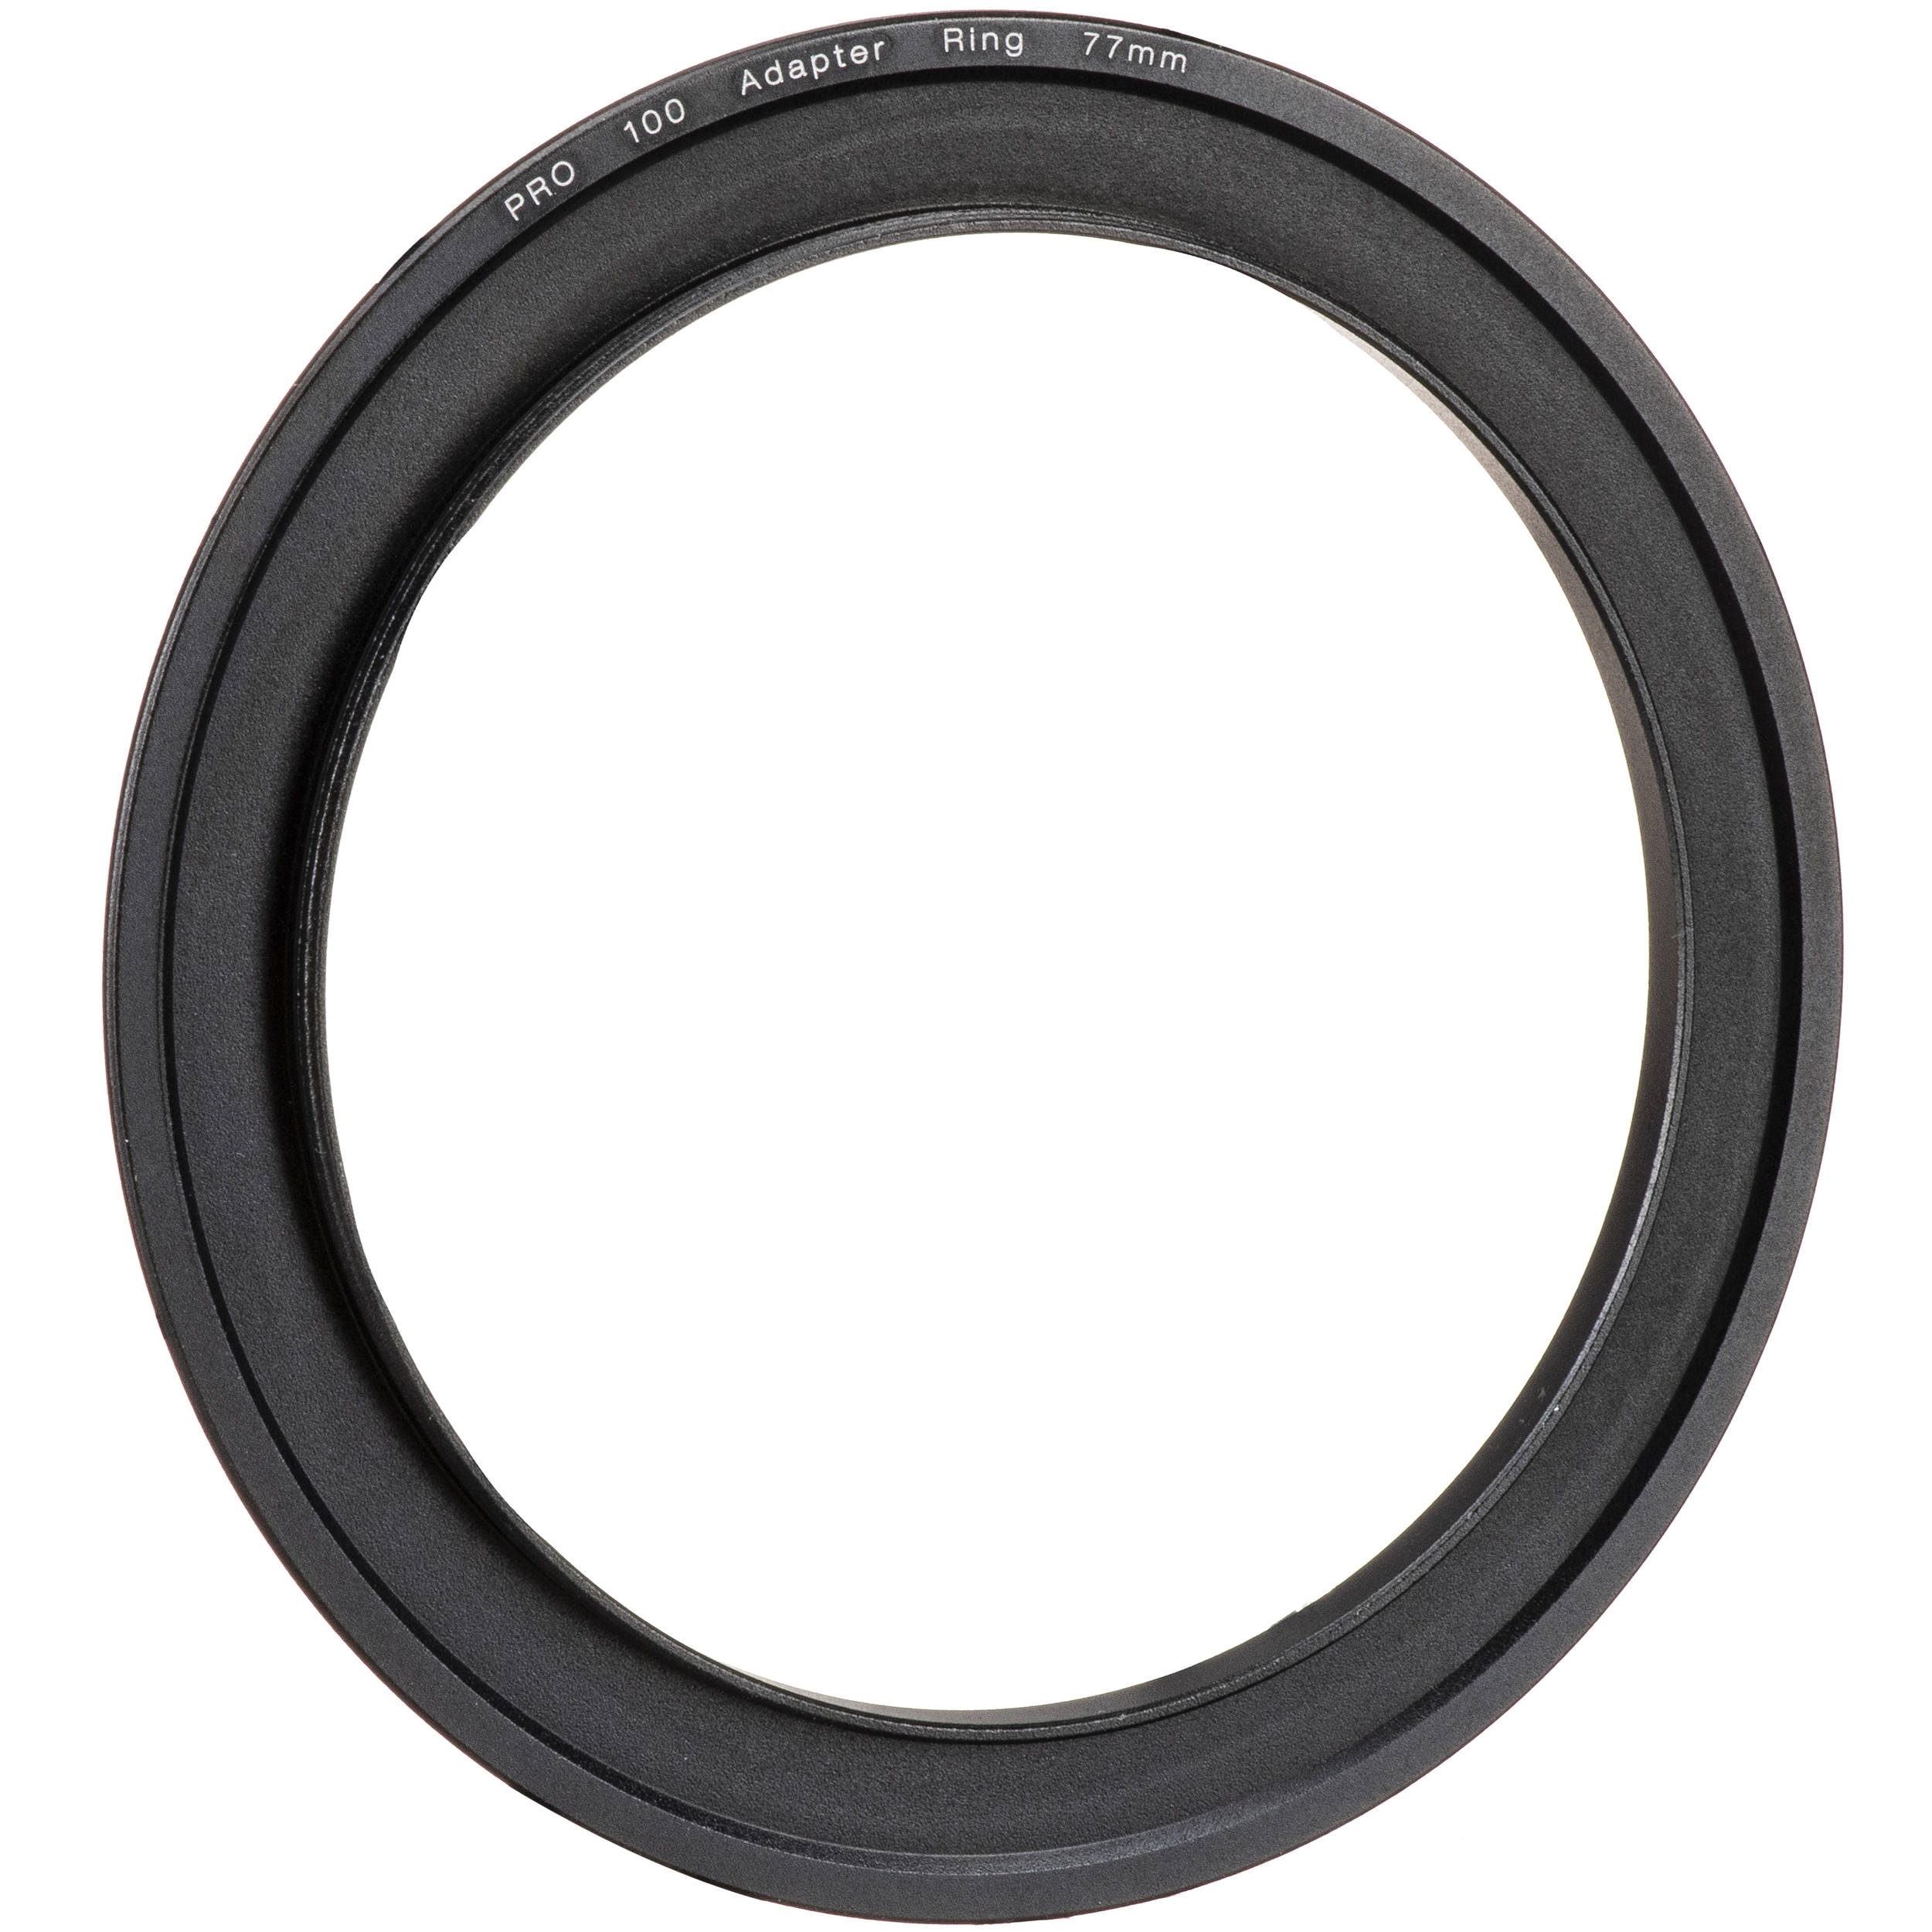 Tiffen 77mm Adapter Ring for Pro100 Series Camera Filter Holder